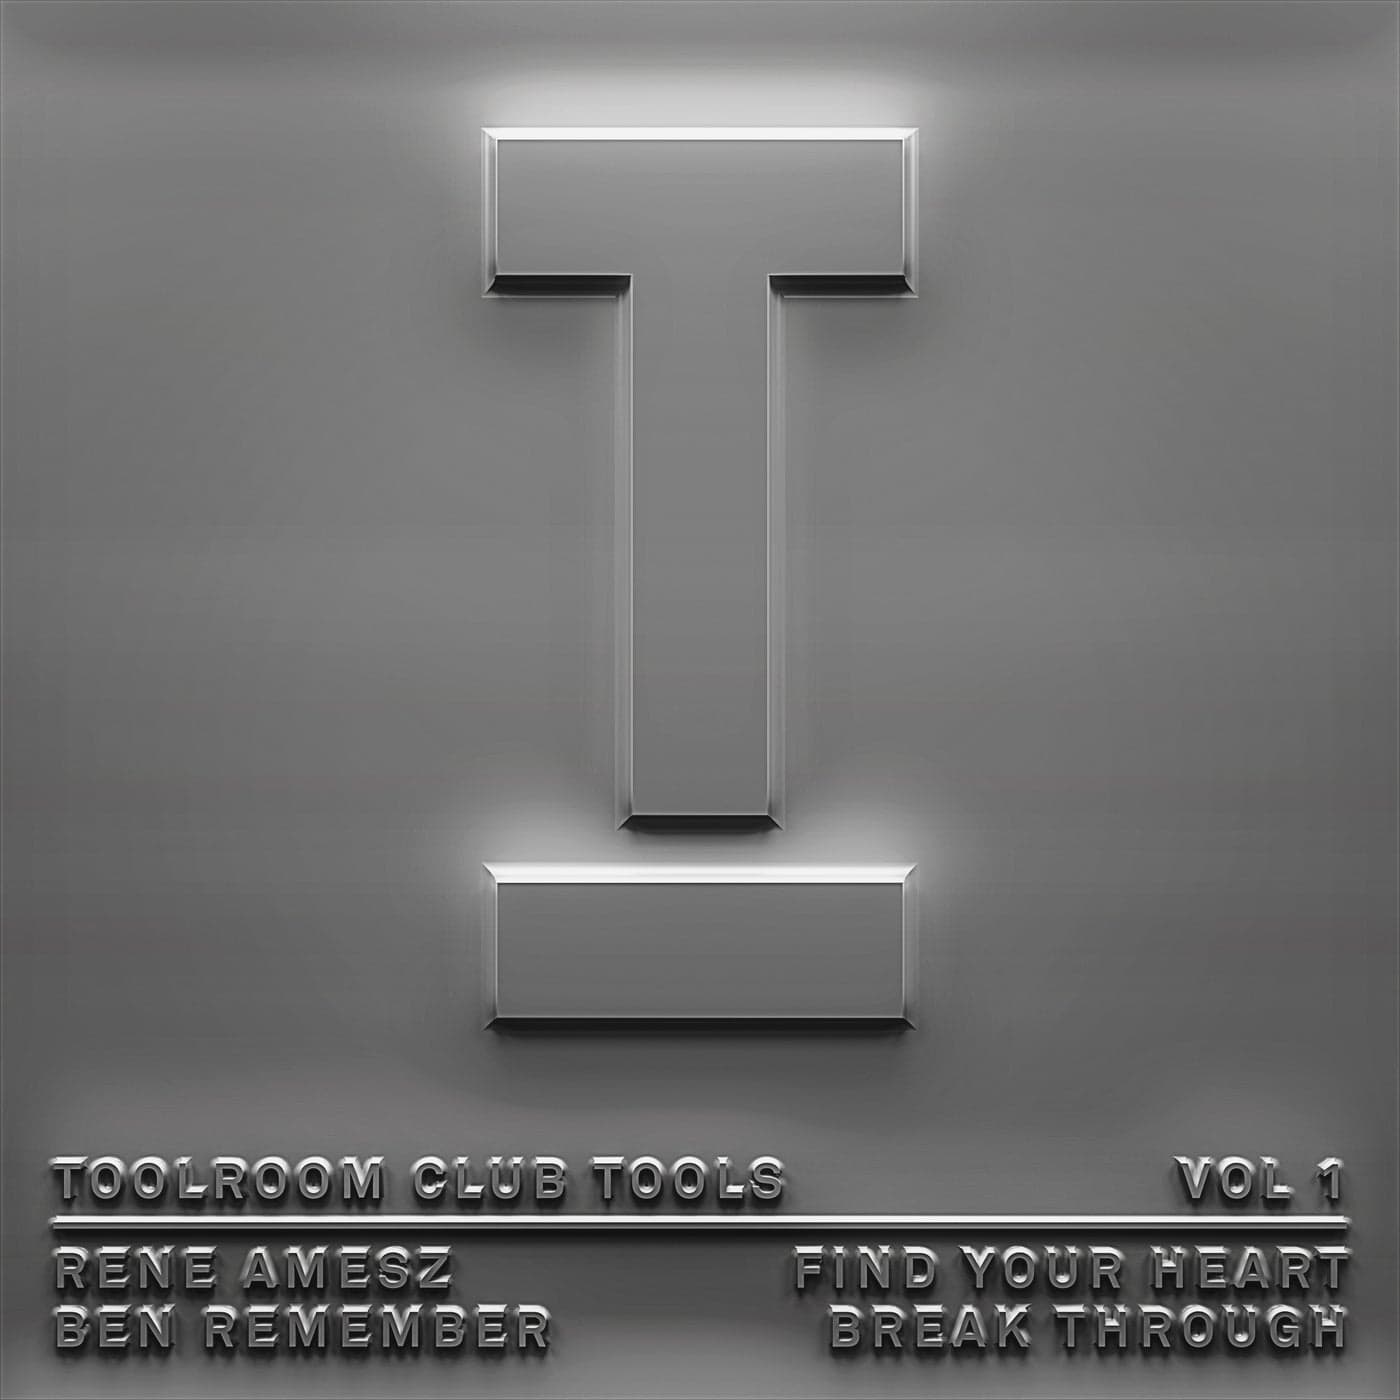 image cover: Rene Amesz, Ben Remember - Toolroom Club Tools Vol 1 / TOOL110501Z